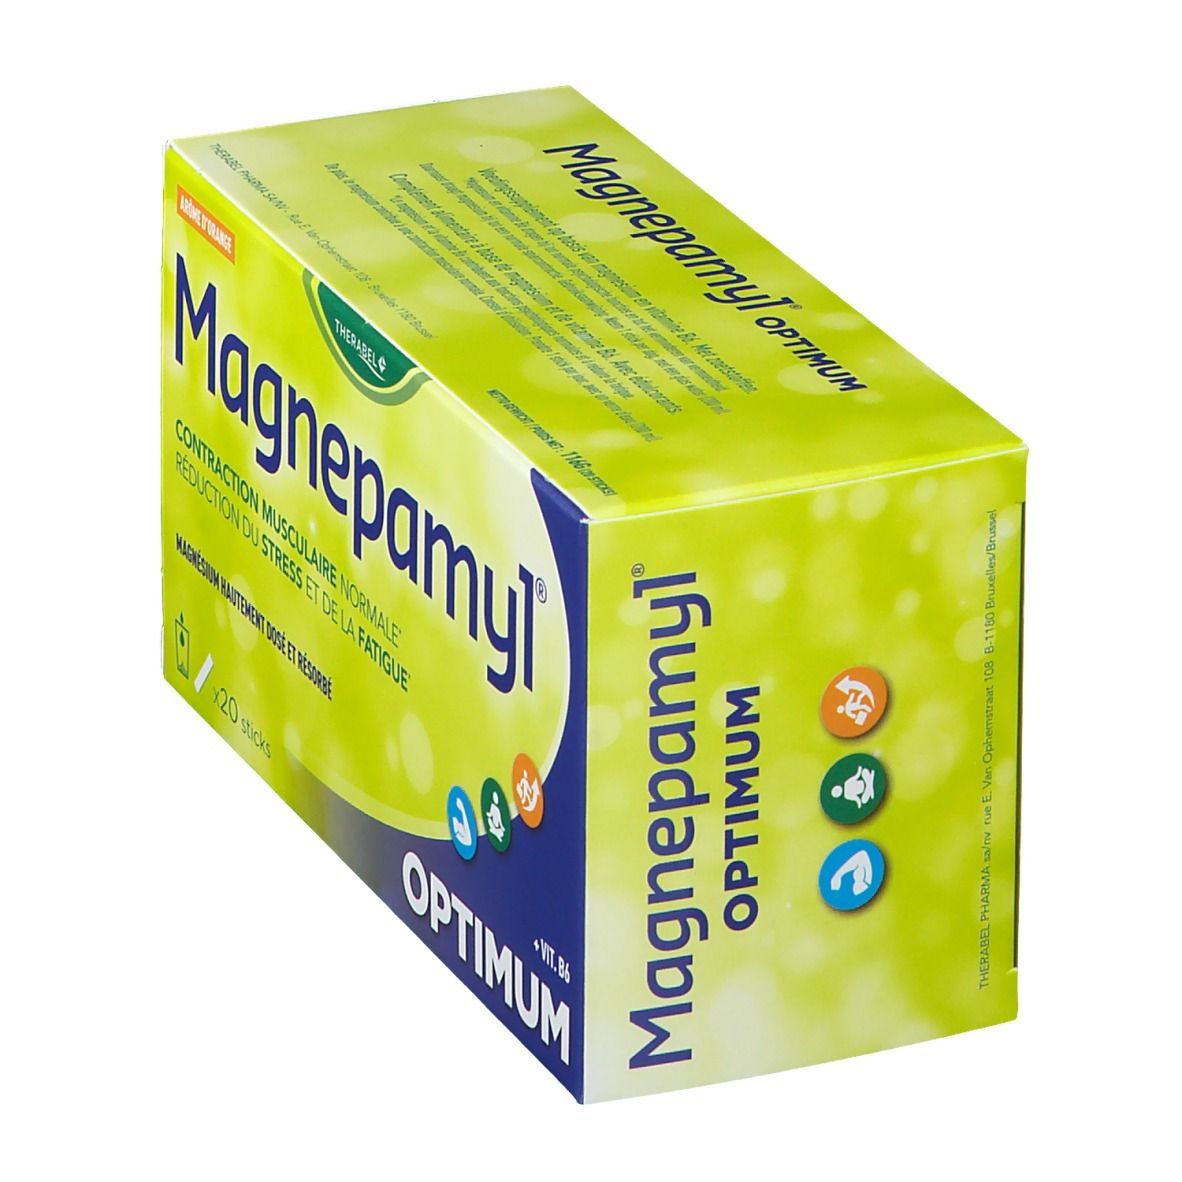 Magnepamyl® Optimum